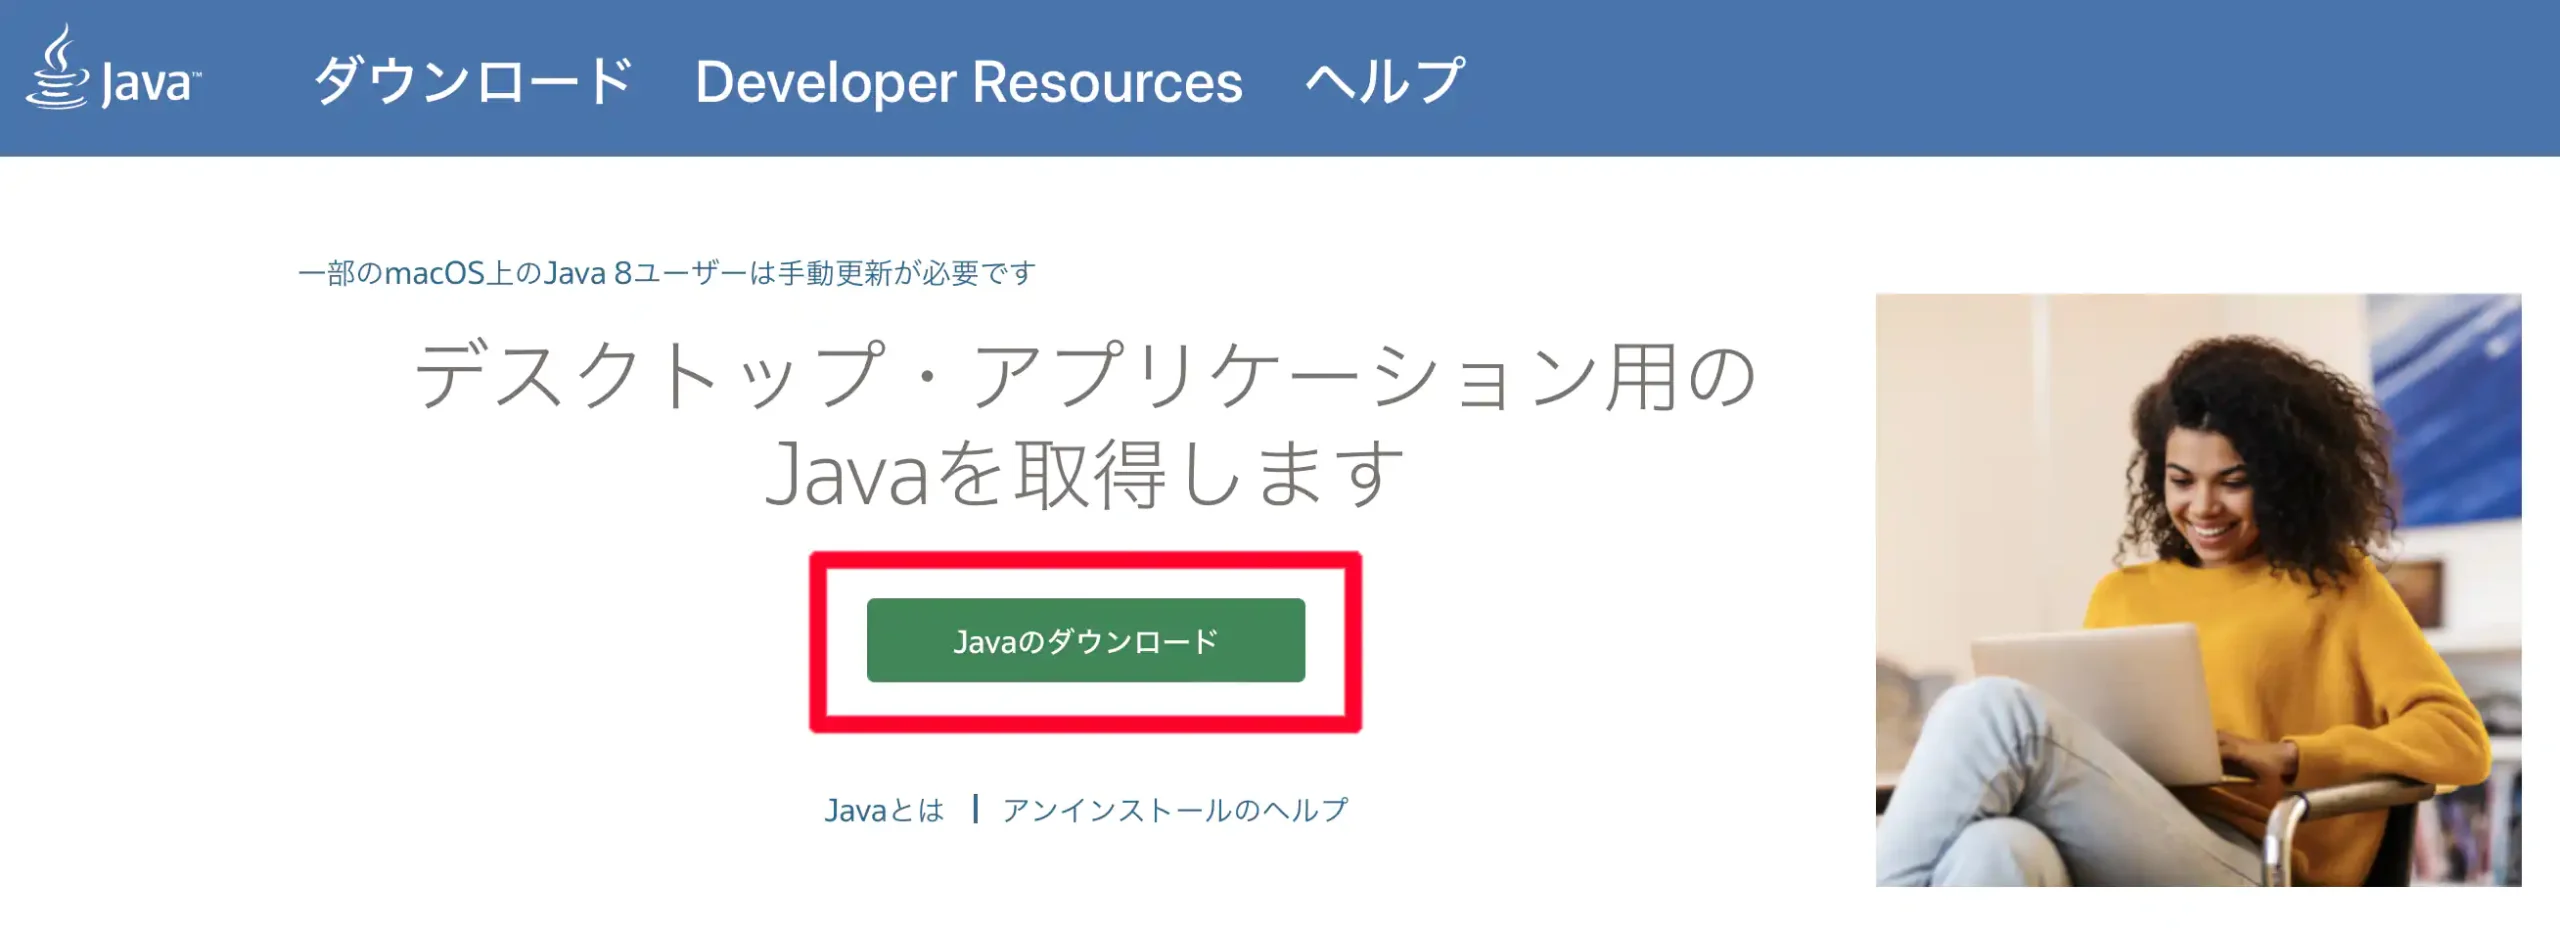 Java-トップ画面